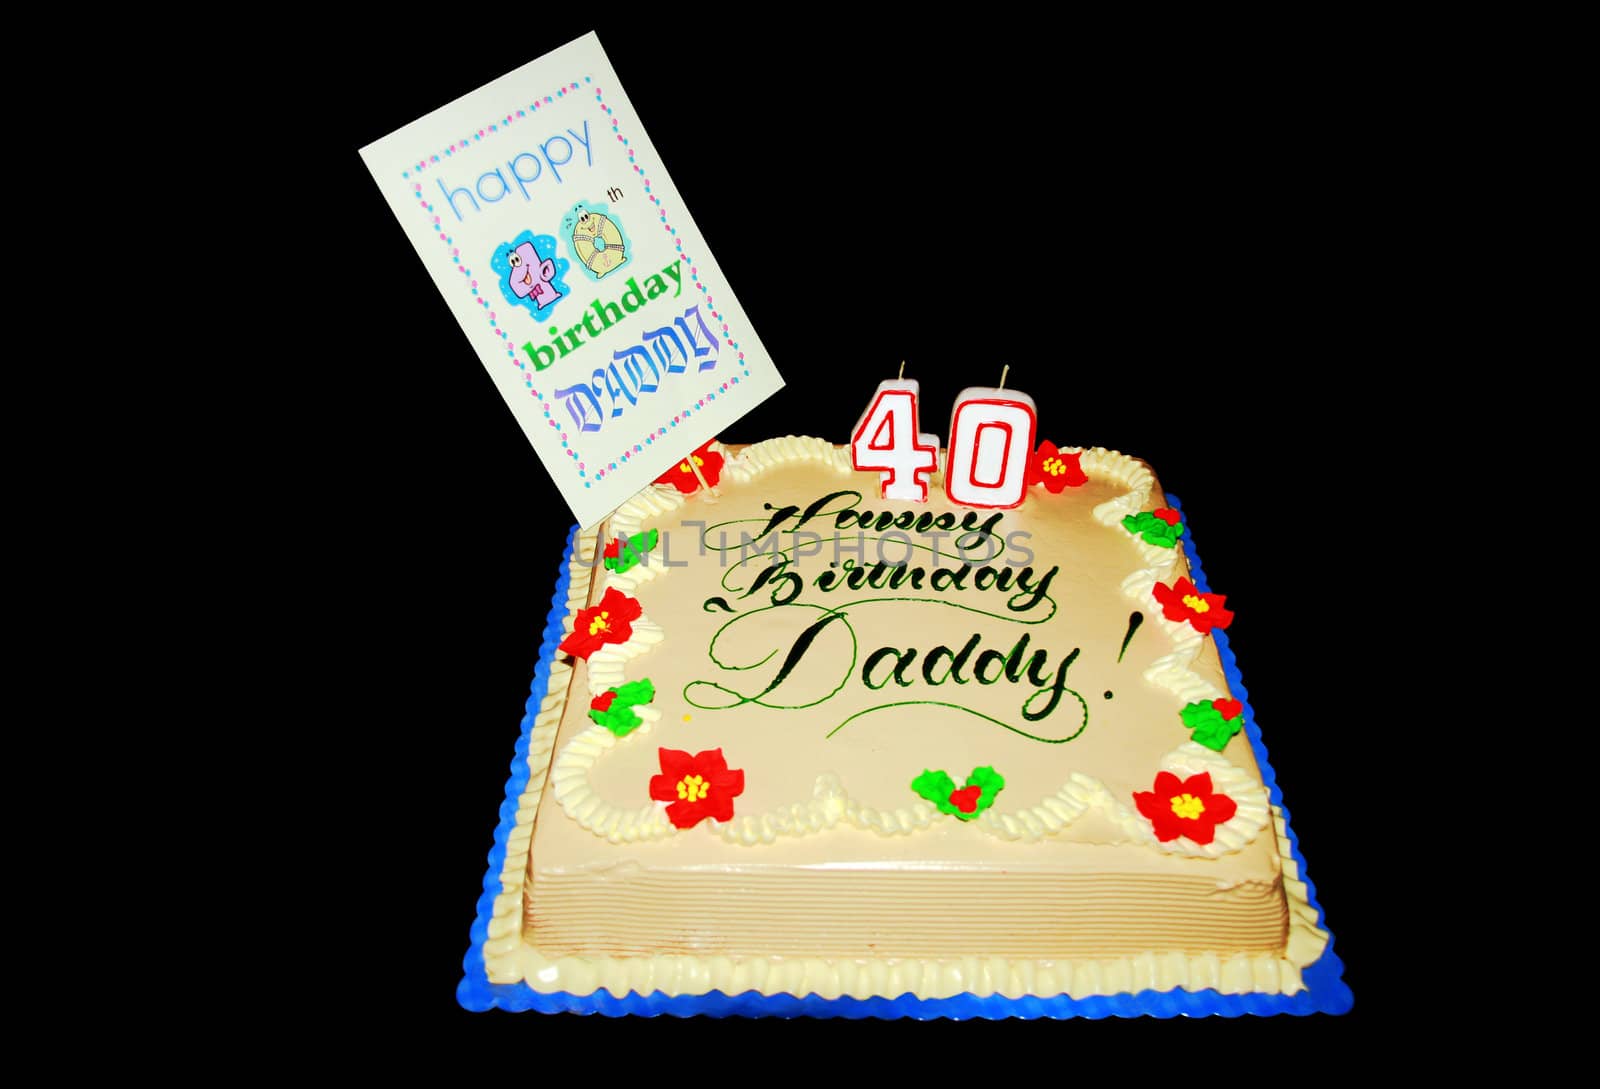 birthday cake for daddy's 40th birthday celebration
